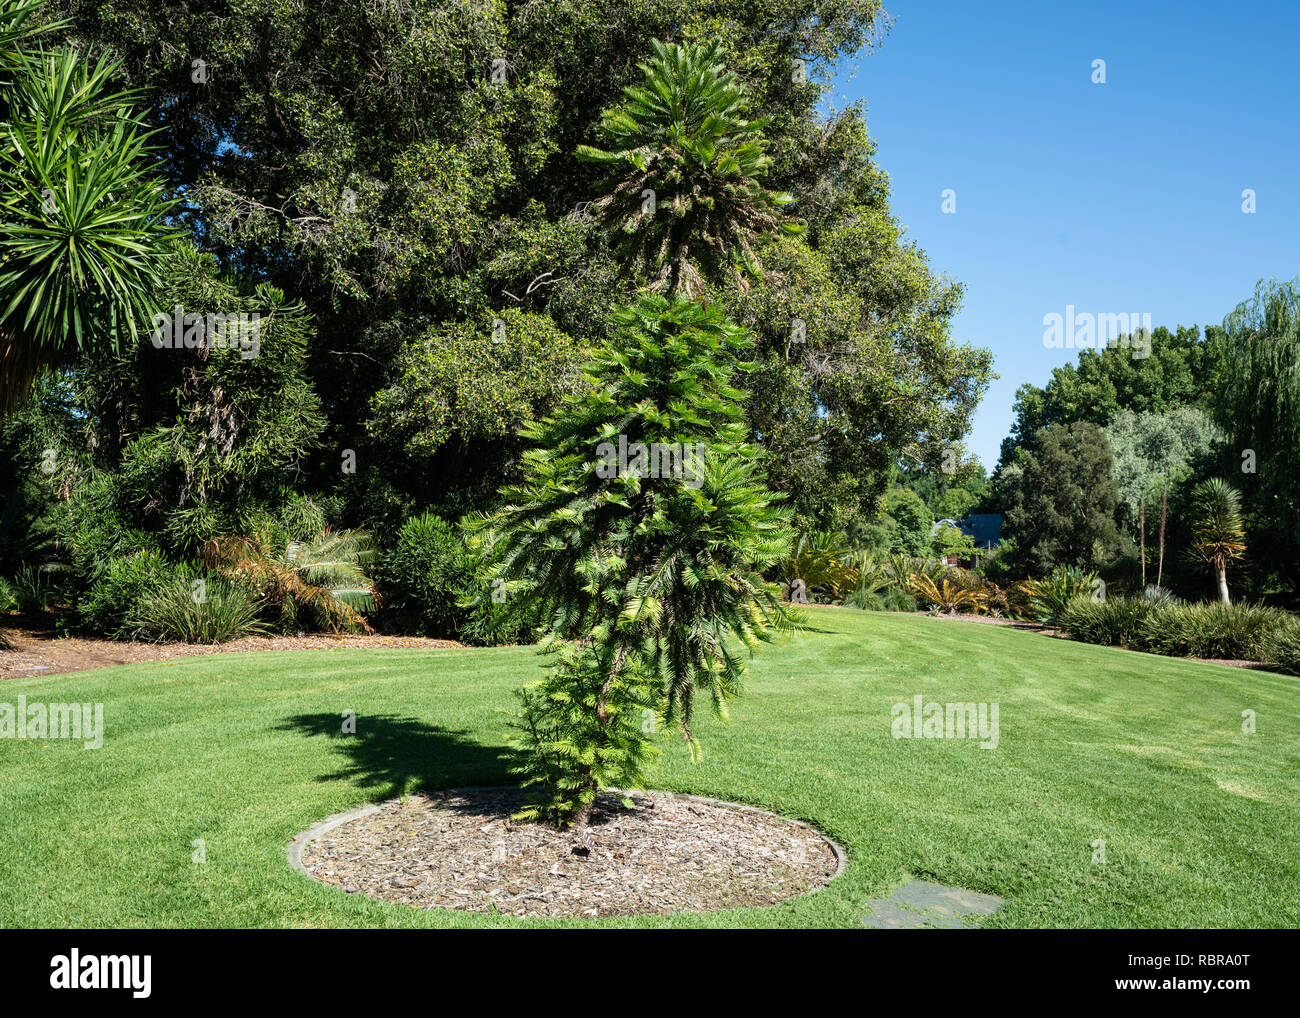 Wollemi pine or wollemia nobilis a critically endangered coniferous tree in Adelaide botanic gardens SA Australia Stock Photo